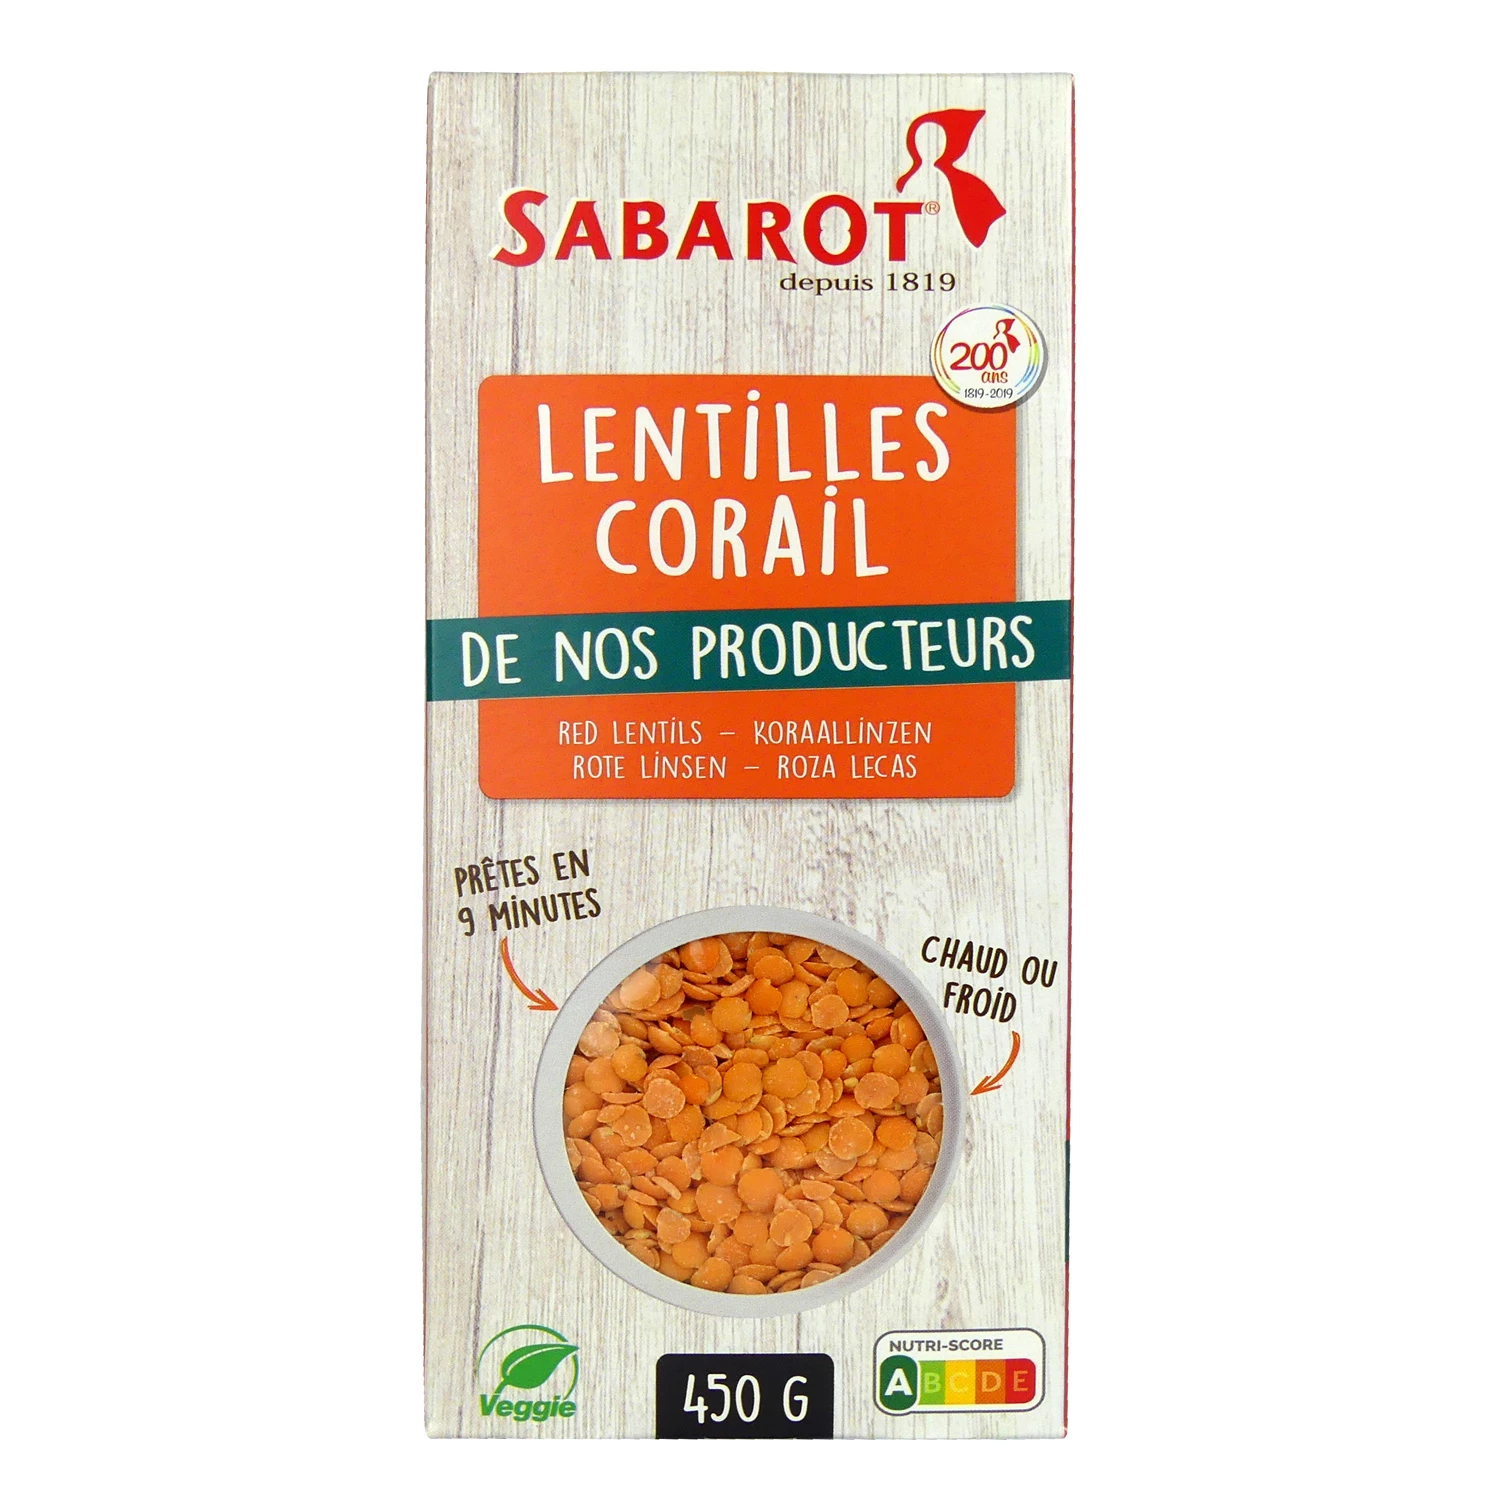 Coral lentils 450g - SABAROT